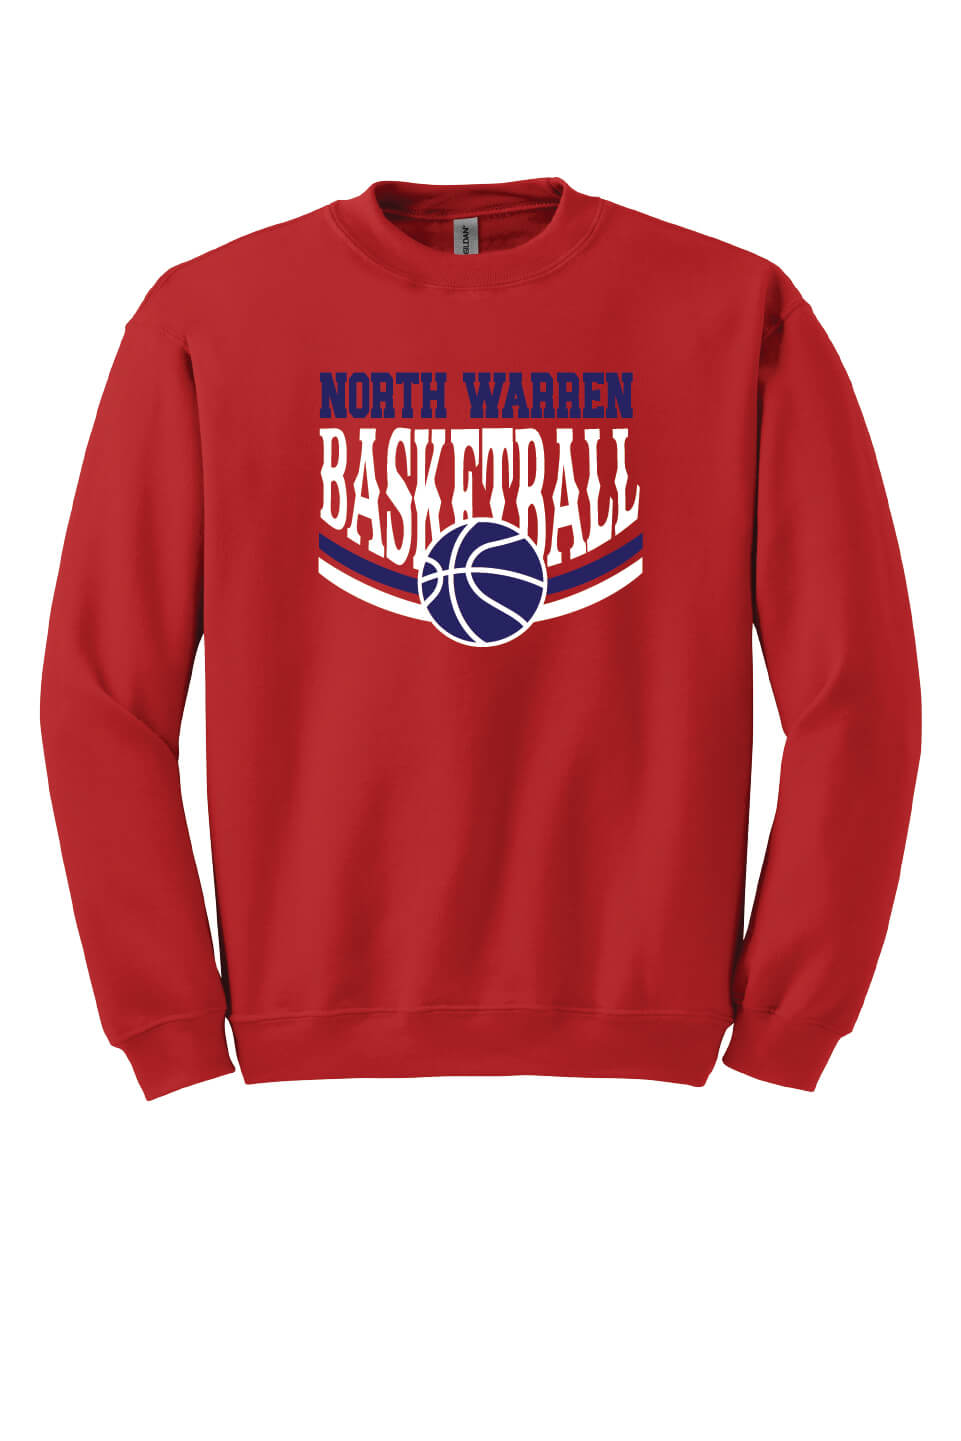 NW Basketball Crewneck Sweatshirt (Youth) red